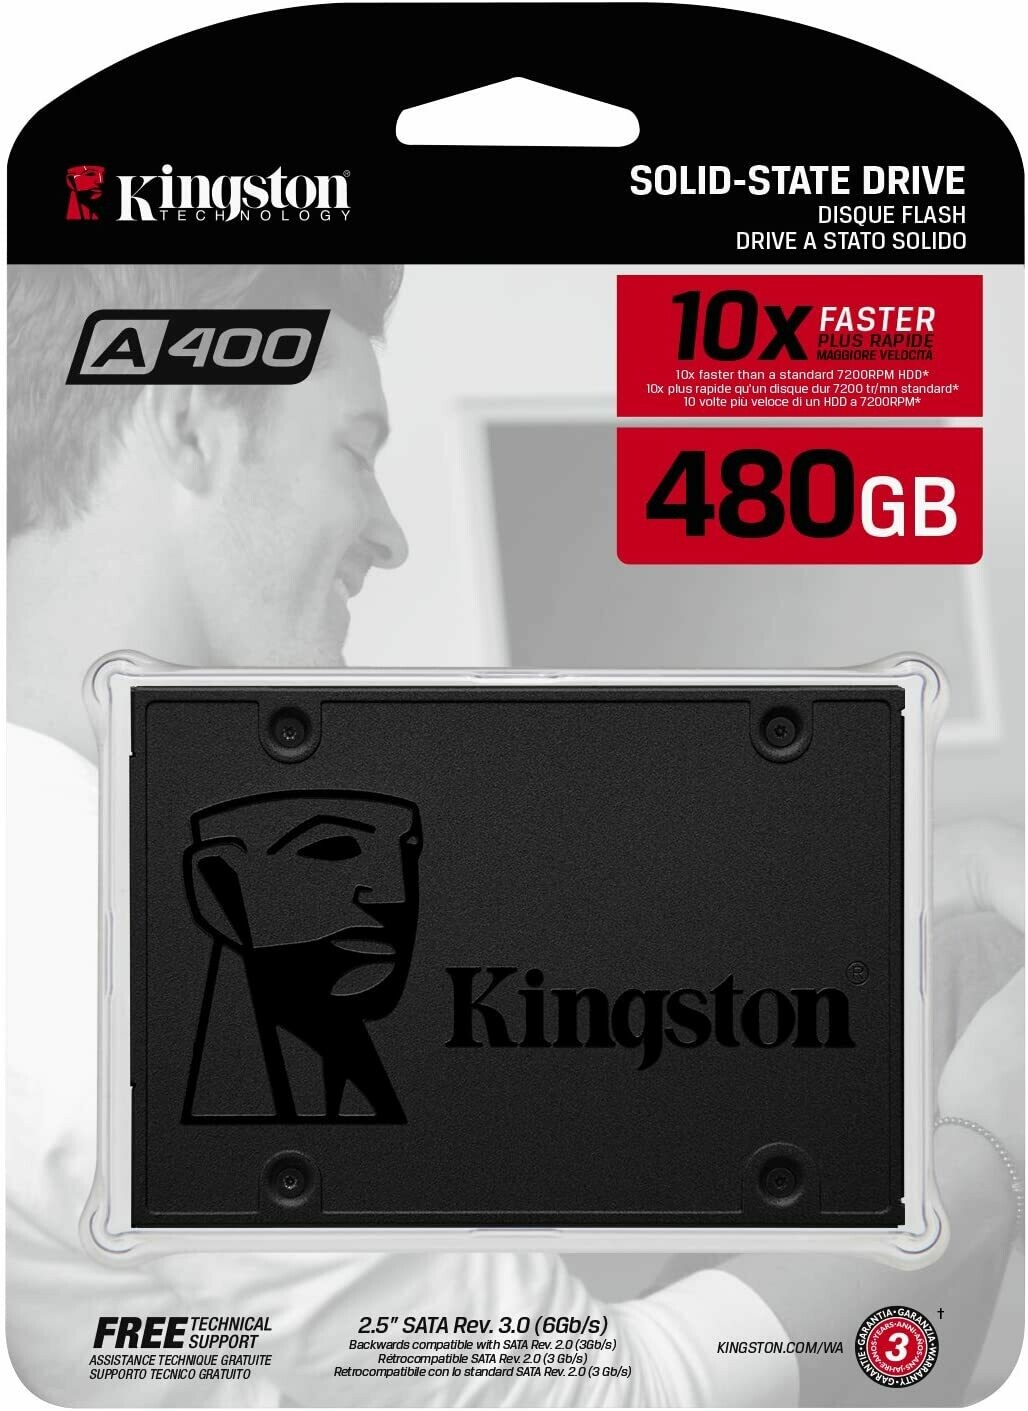 Kingston A400 SSD SA400S37480G 480GB